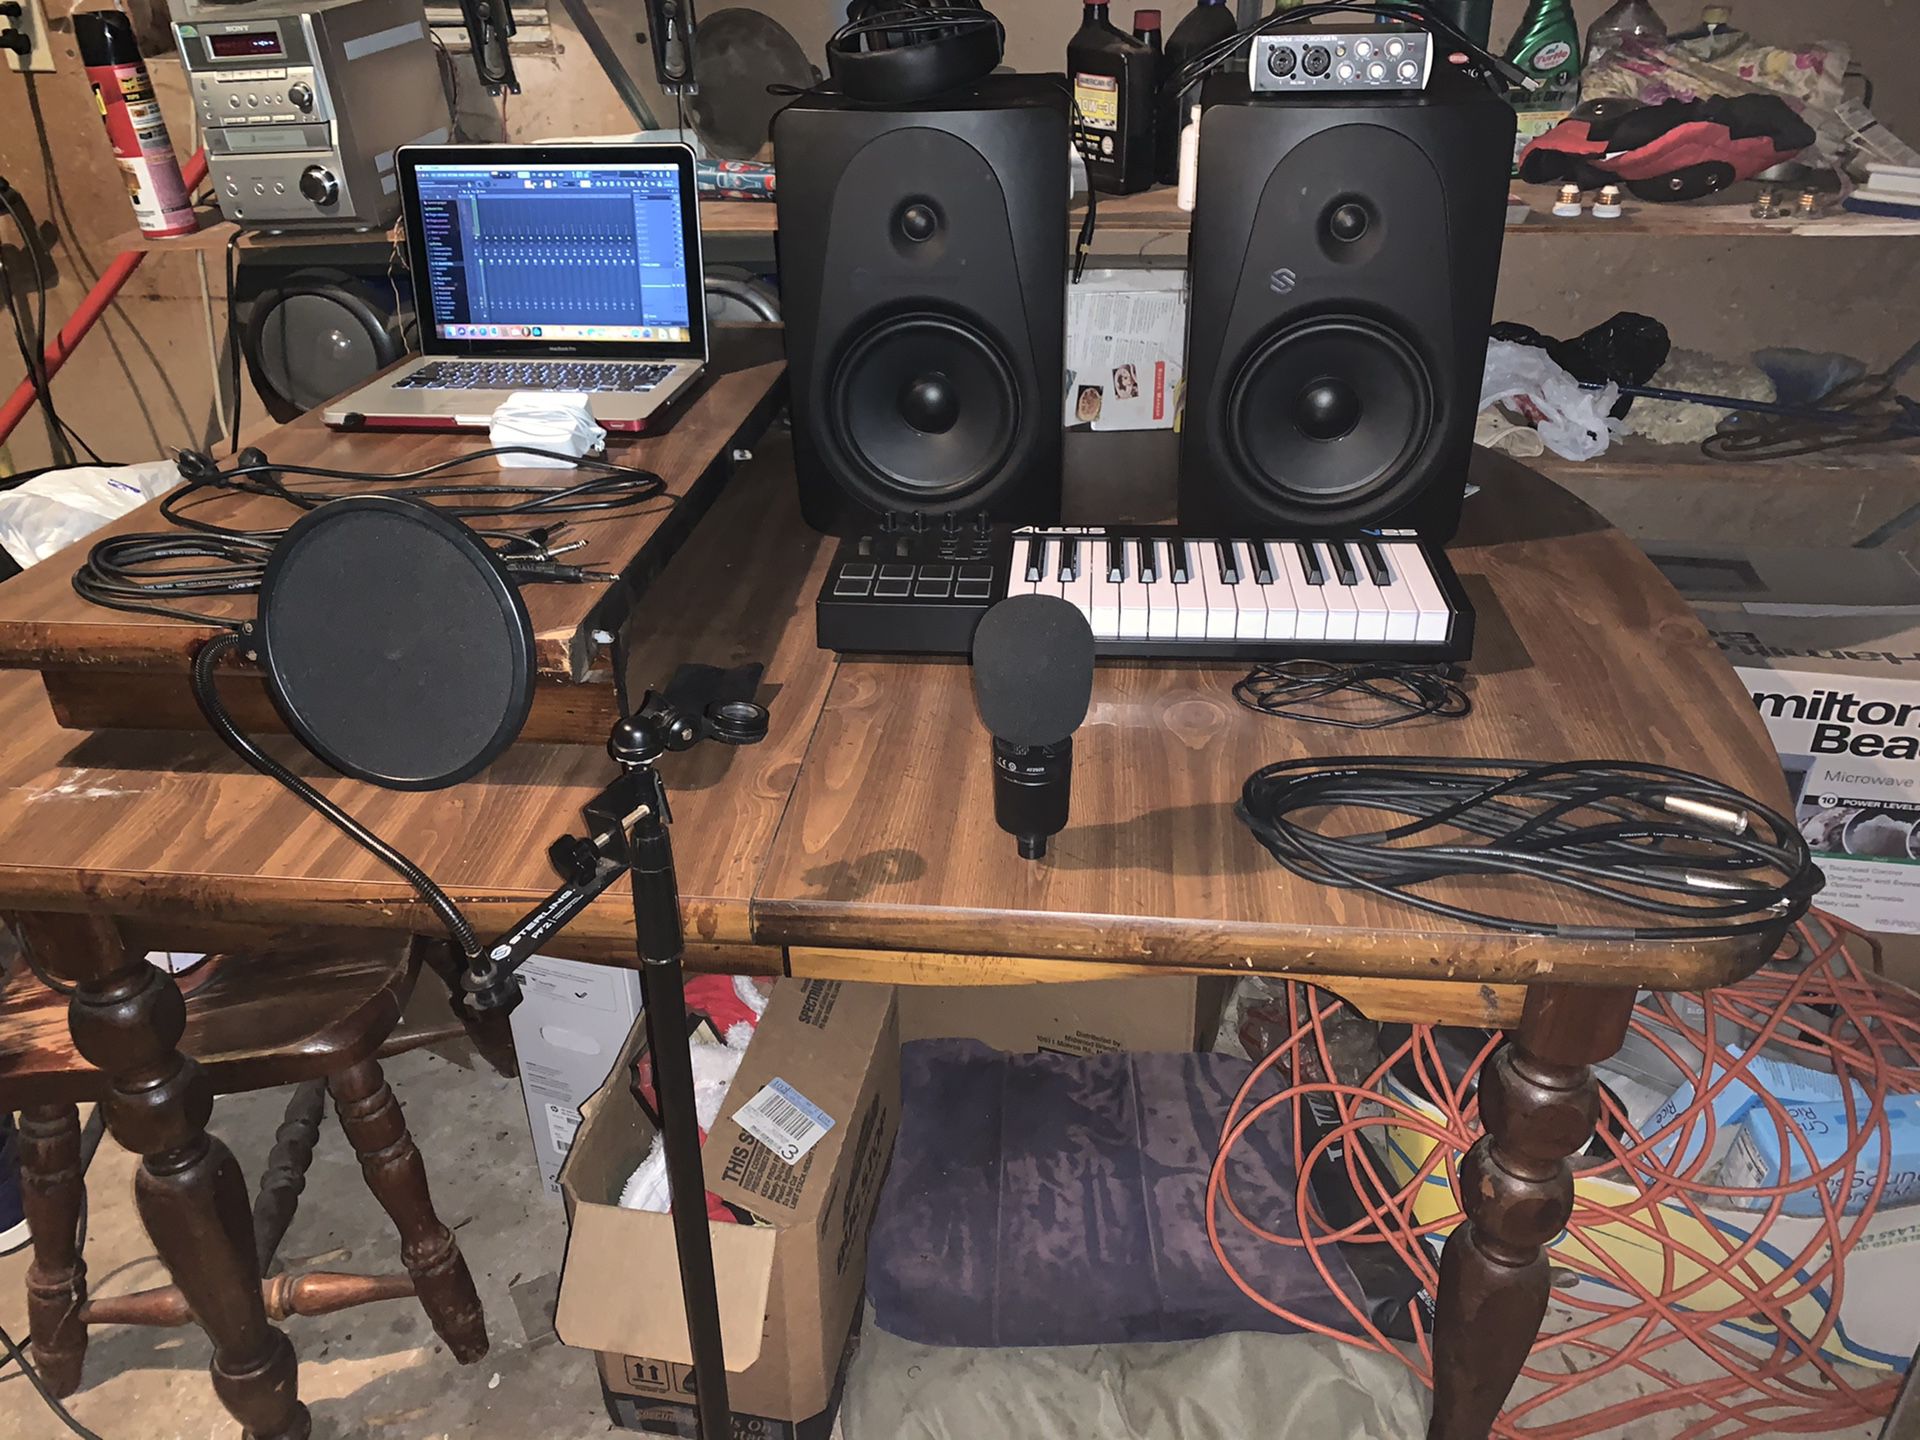 Studio equipment